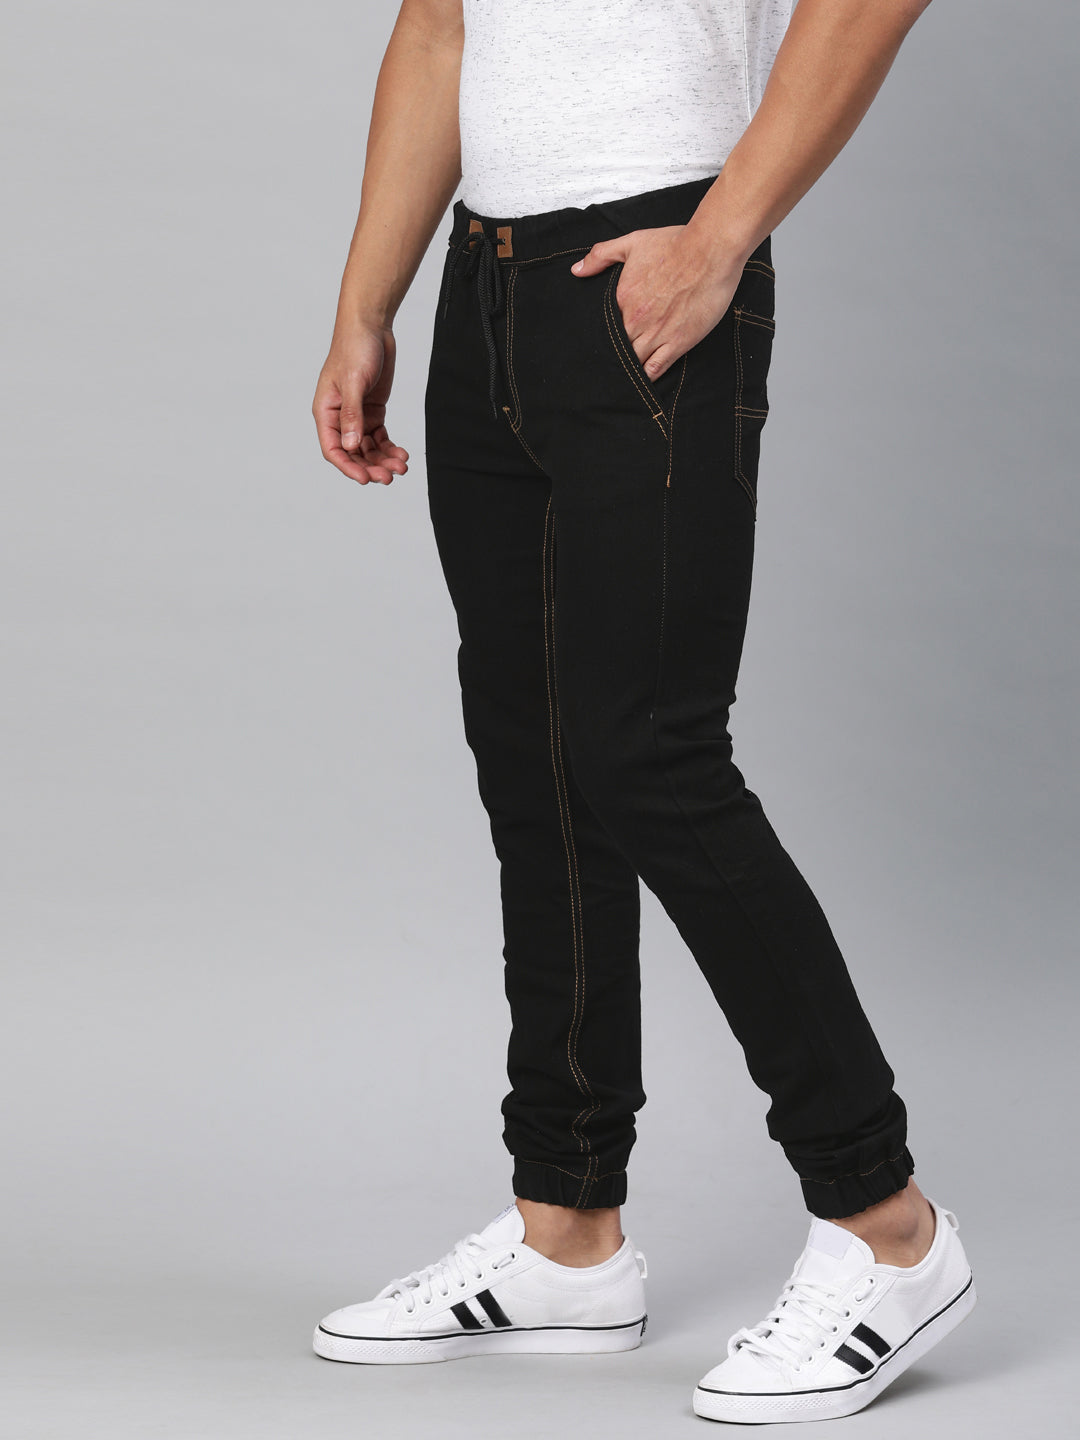 Urbano Fashion Men's Black Jogger Jeans Slim Fit Stretch